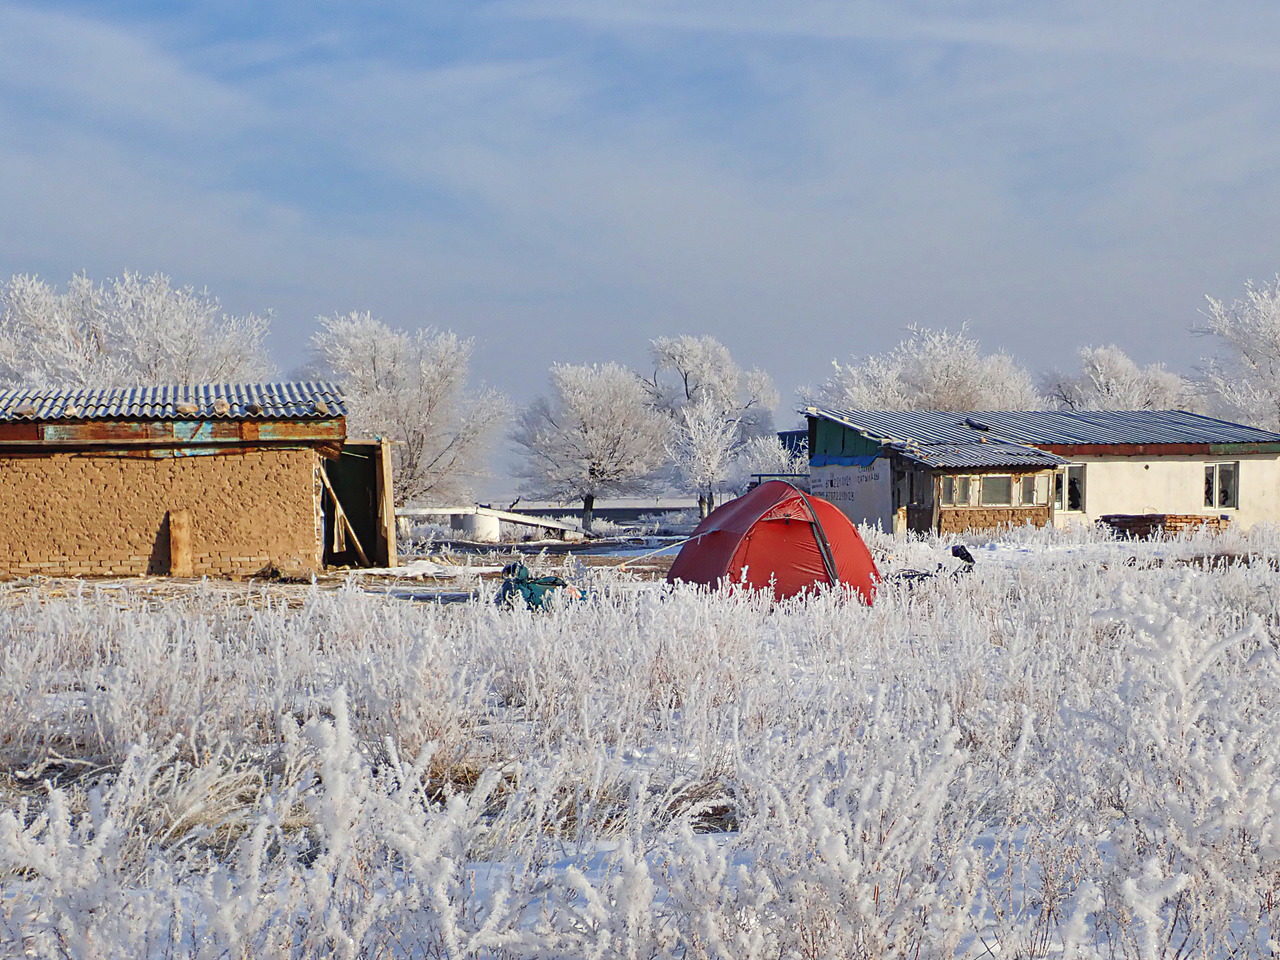 Morning in Kazakhstan